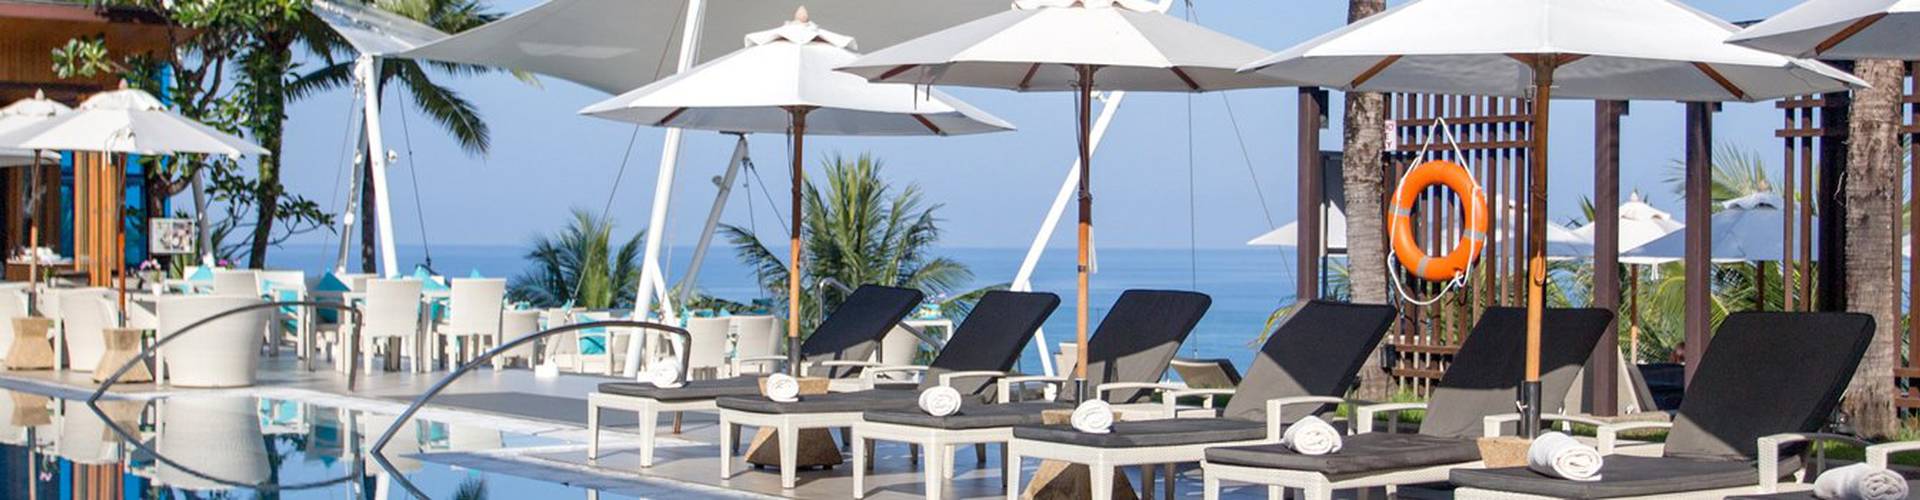 Cape Sienna Phuket Gourmet Hotel & Villas - Phuket - Add a review